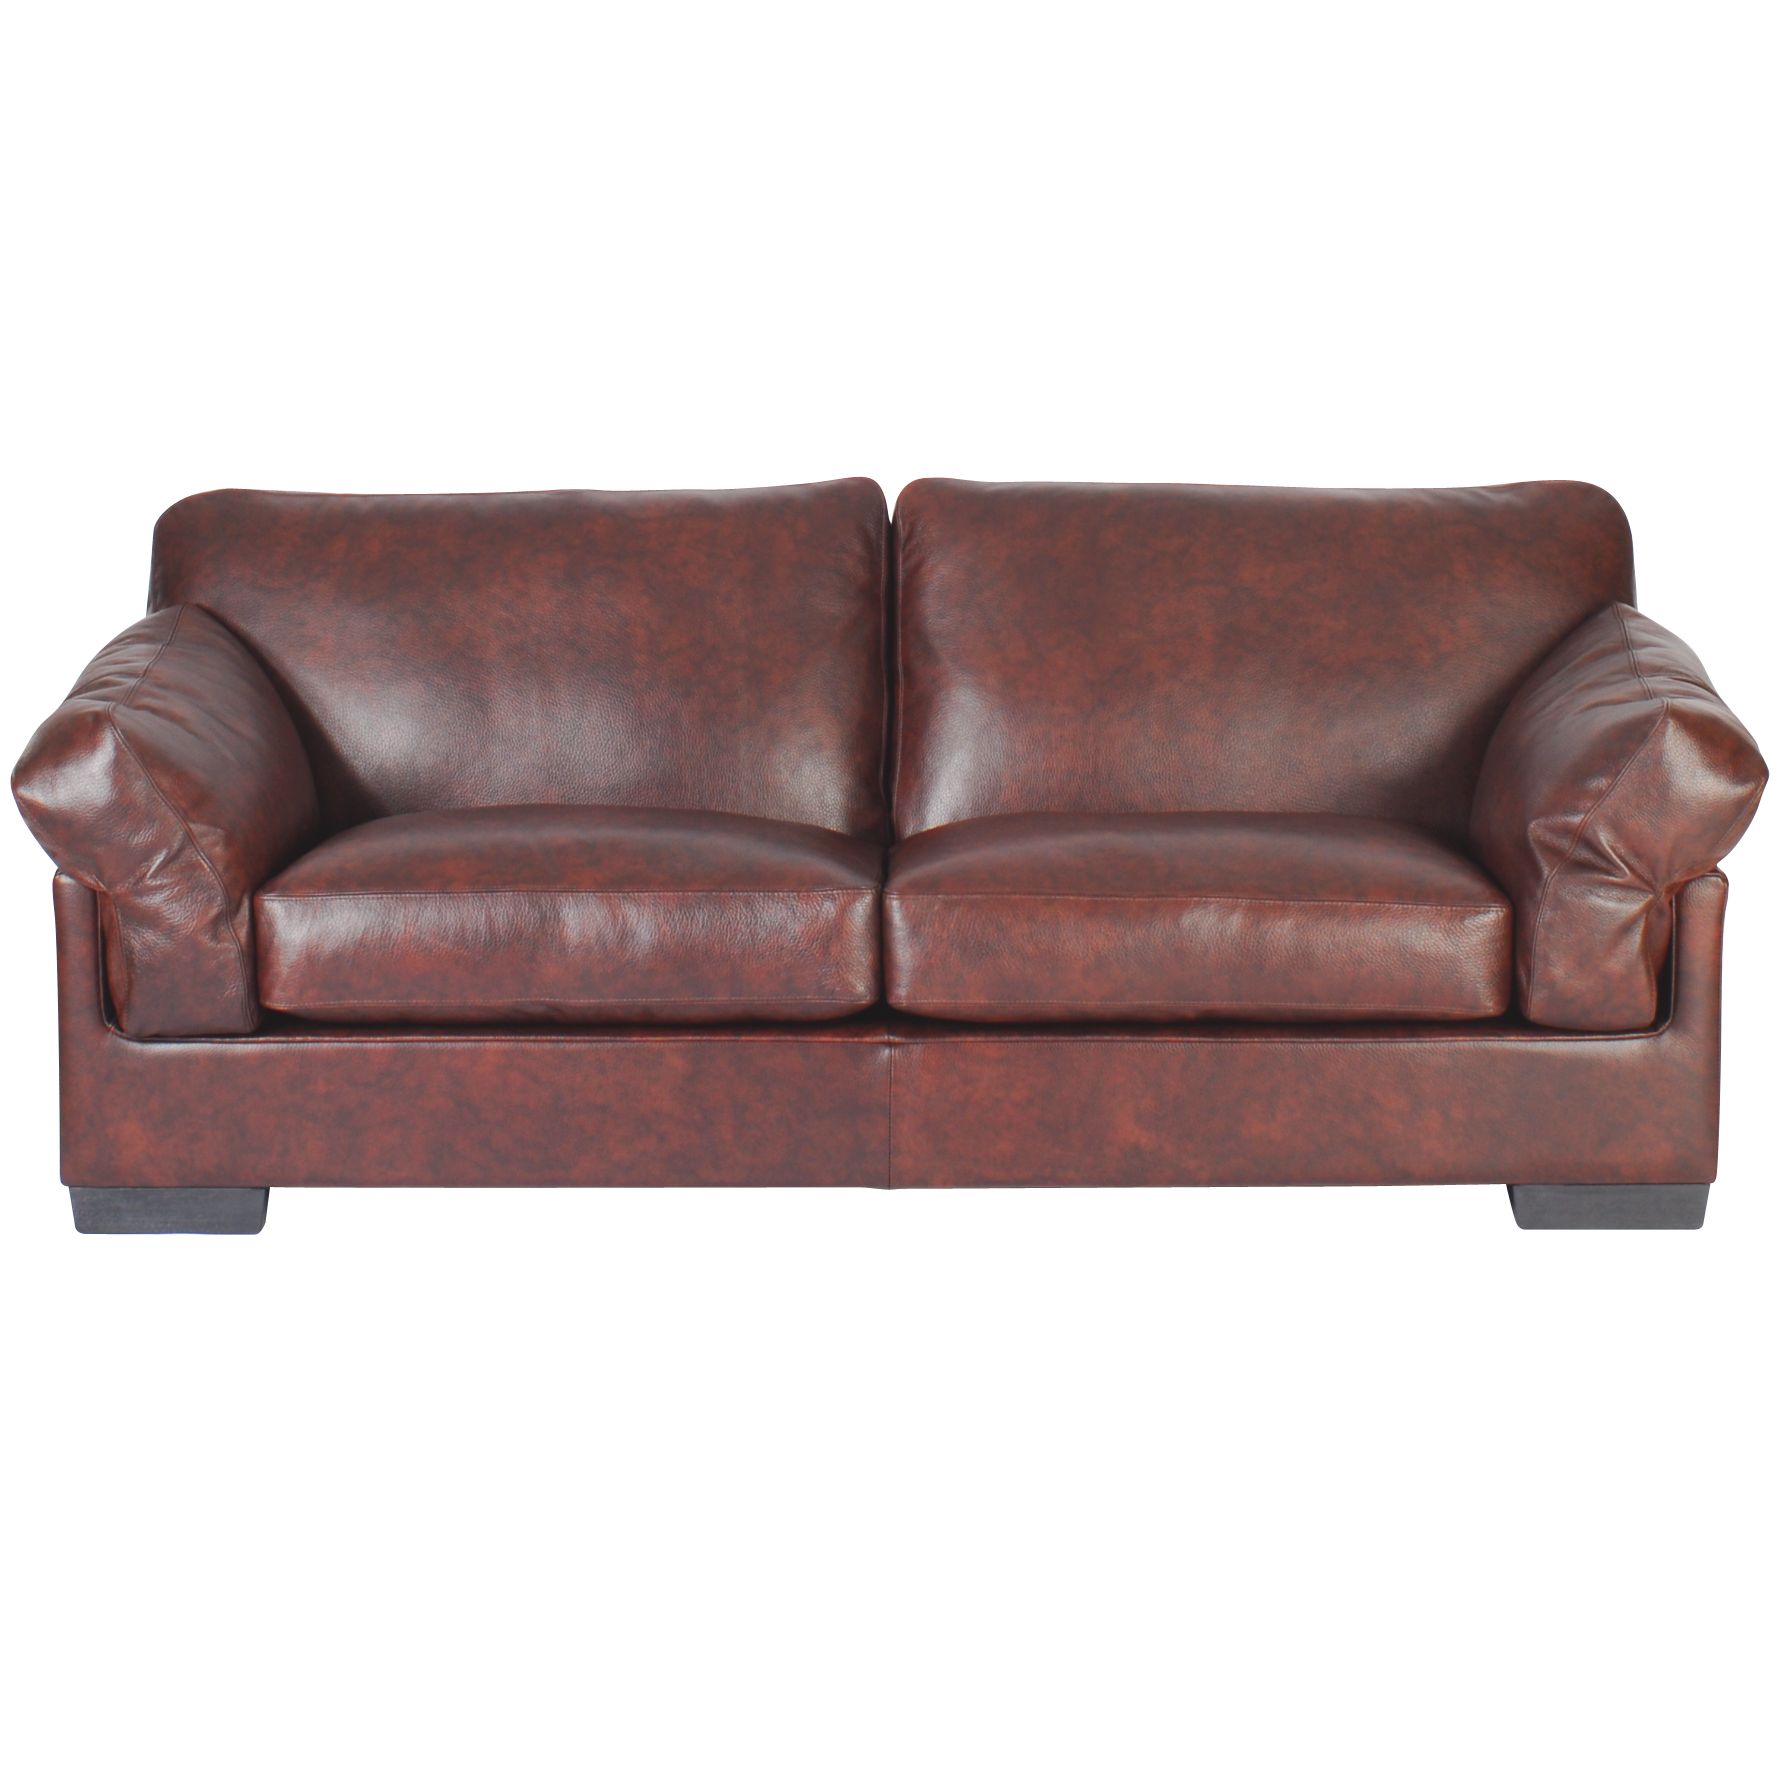 John Lewis Calanda Grand Leather Sofa, Chocolate, width 211cm